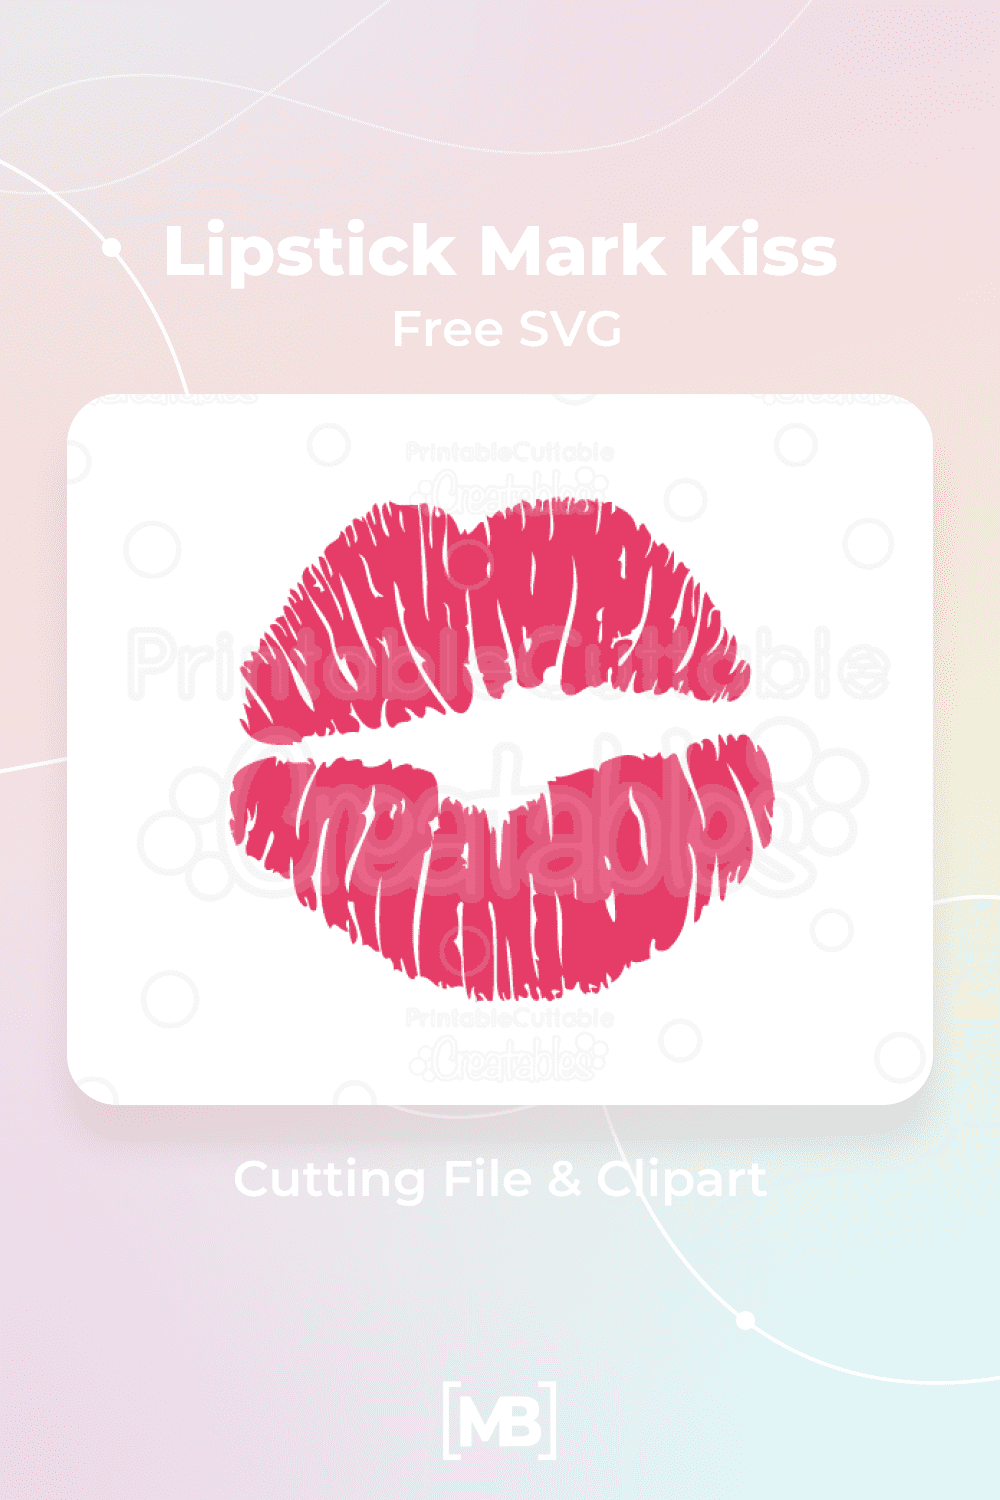 Lipstick Mark Kiss Free SVG Cutting File & Clipart.